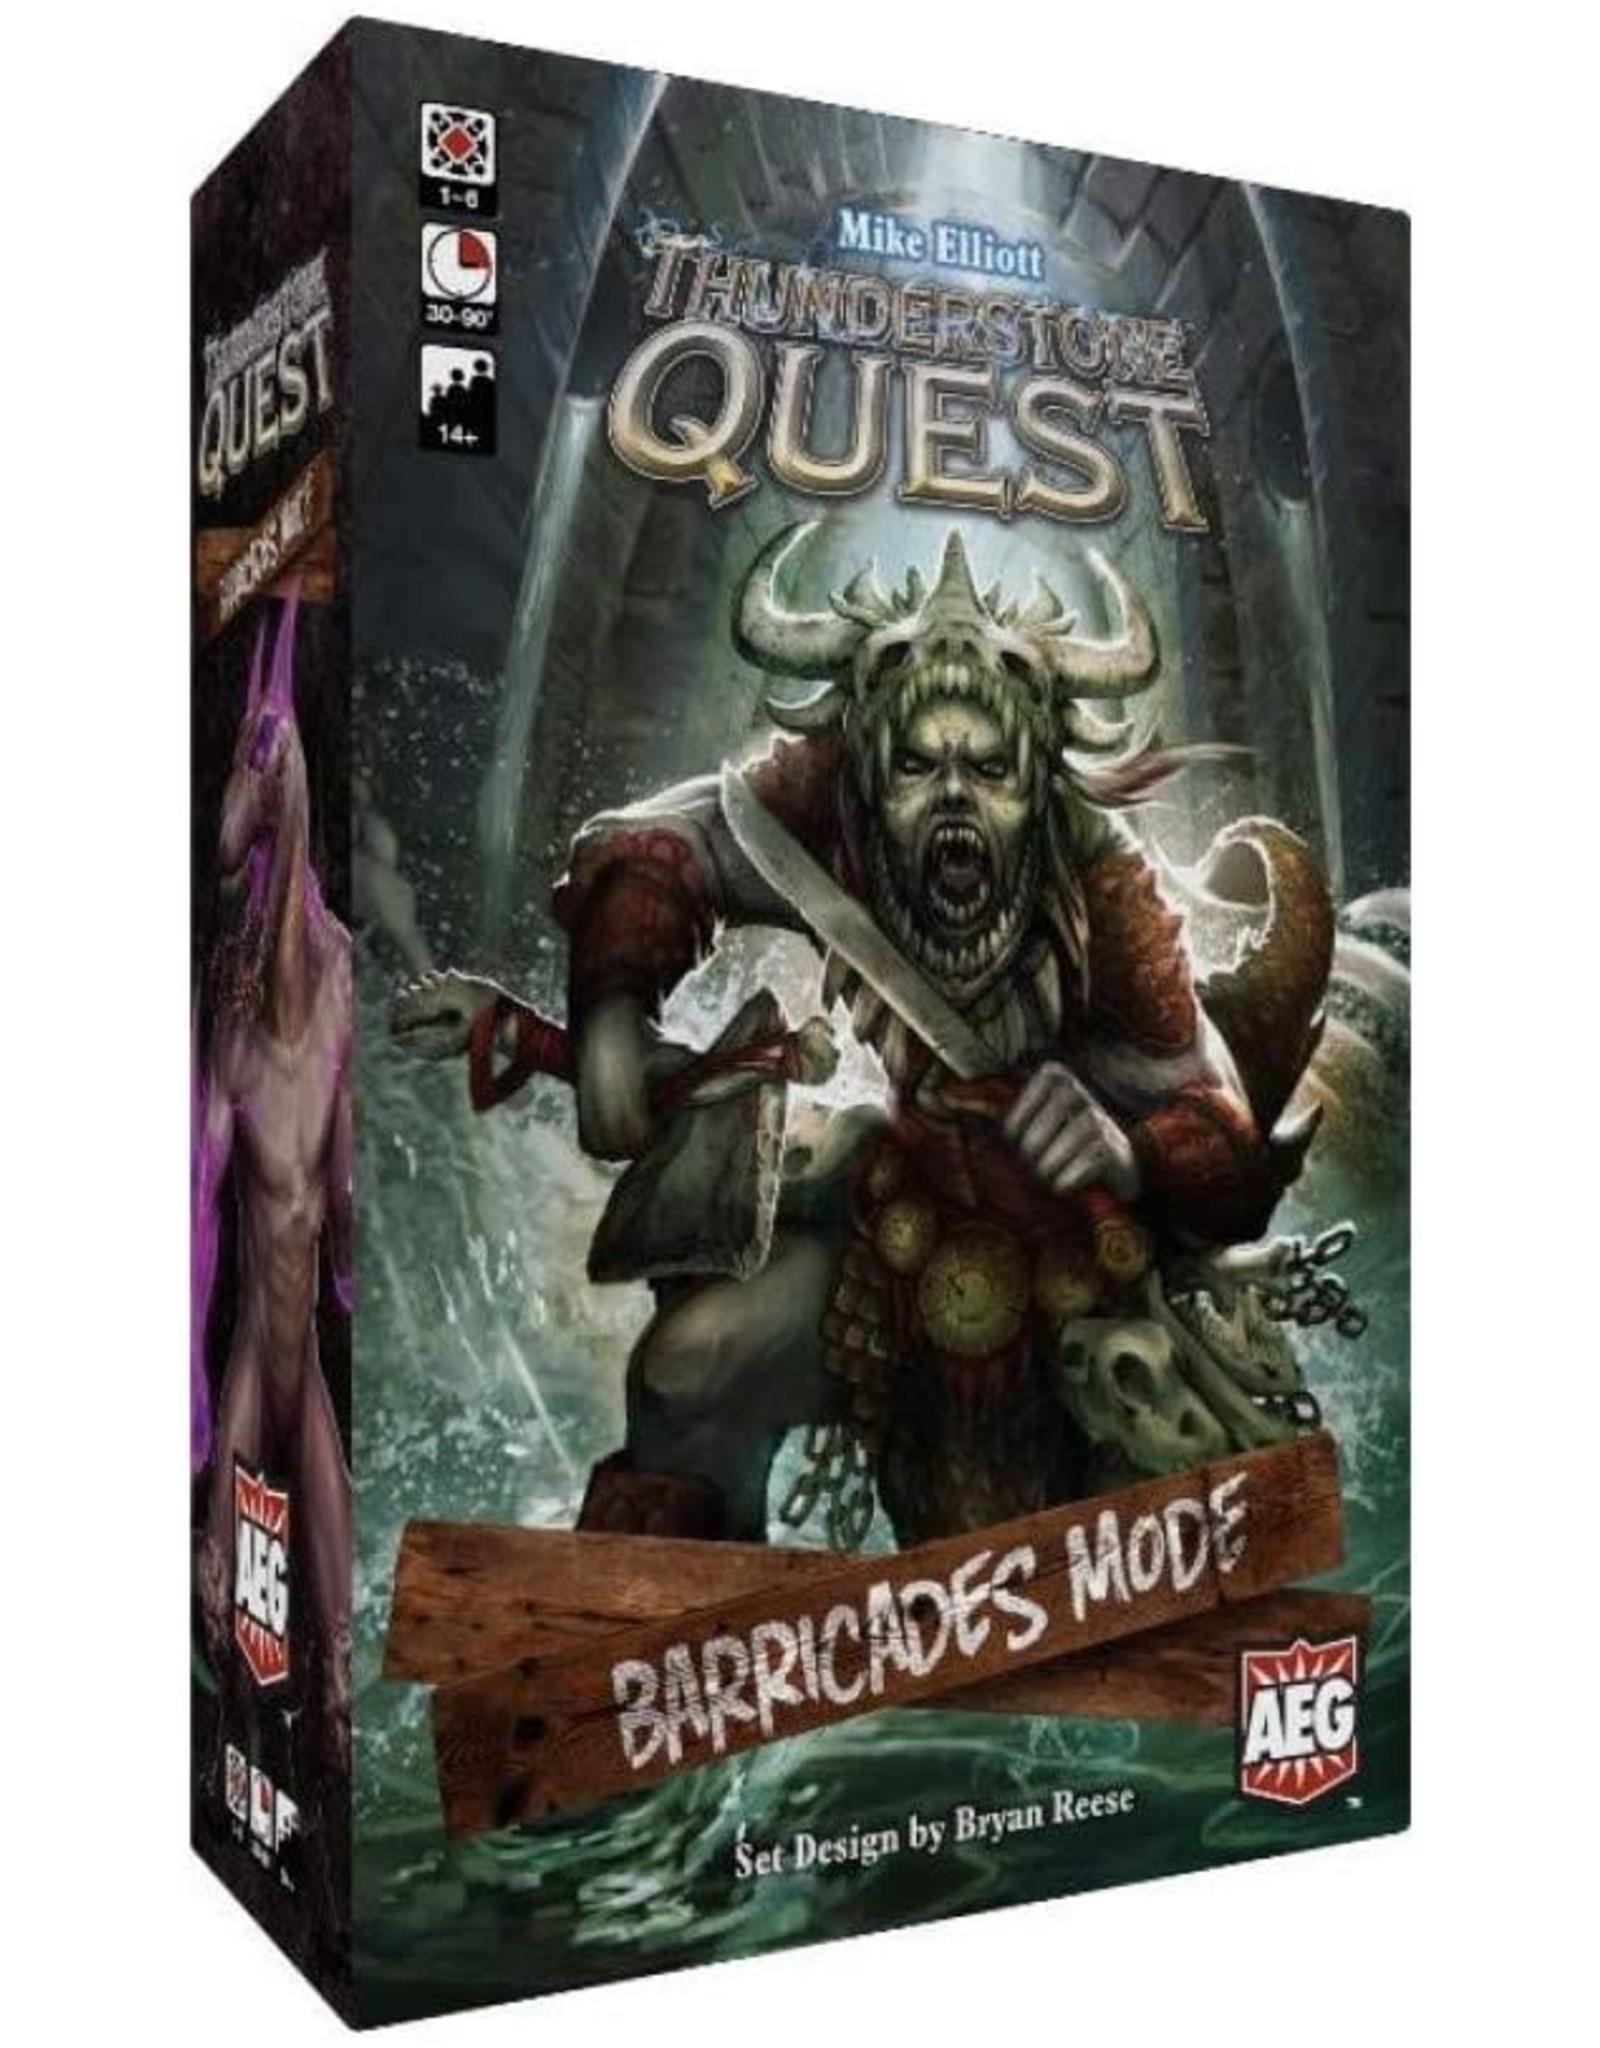 AEG Thunderstone Quest: Barricades Mode